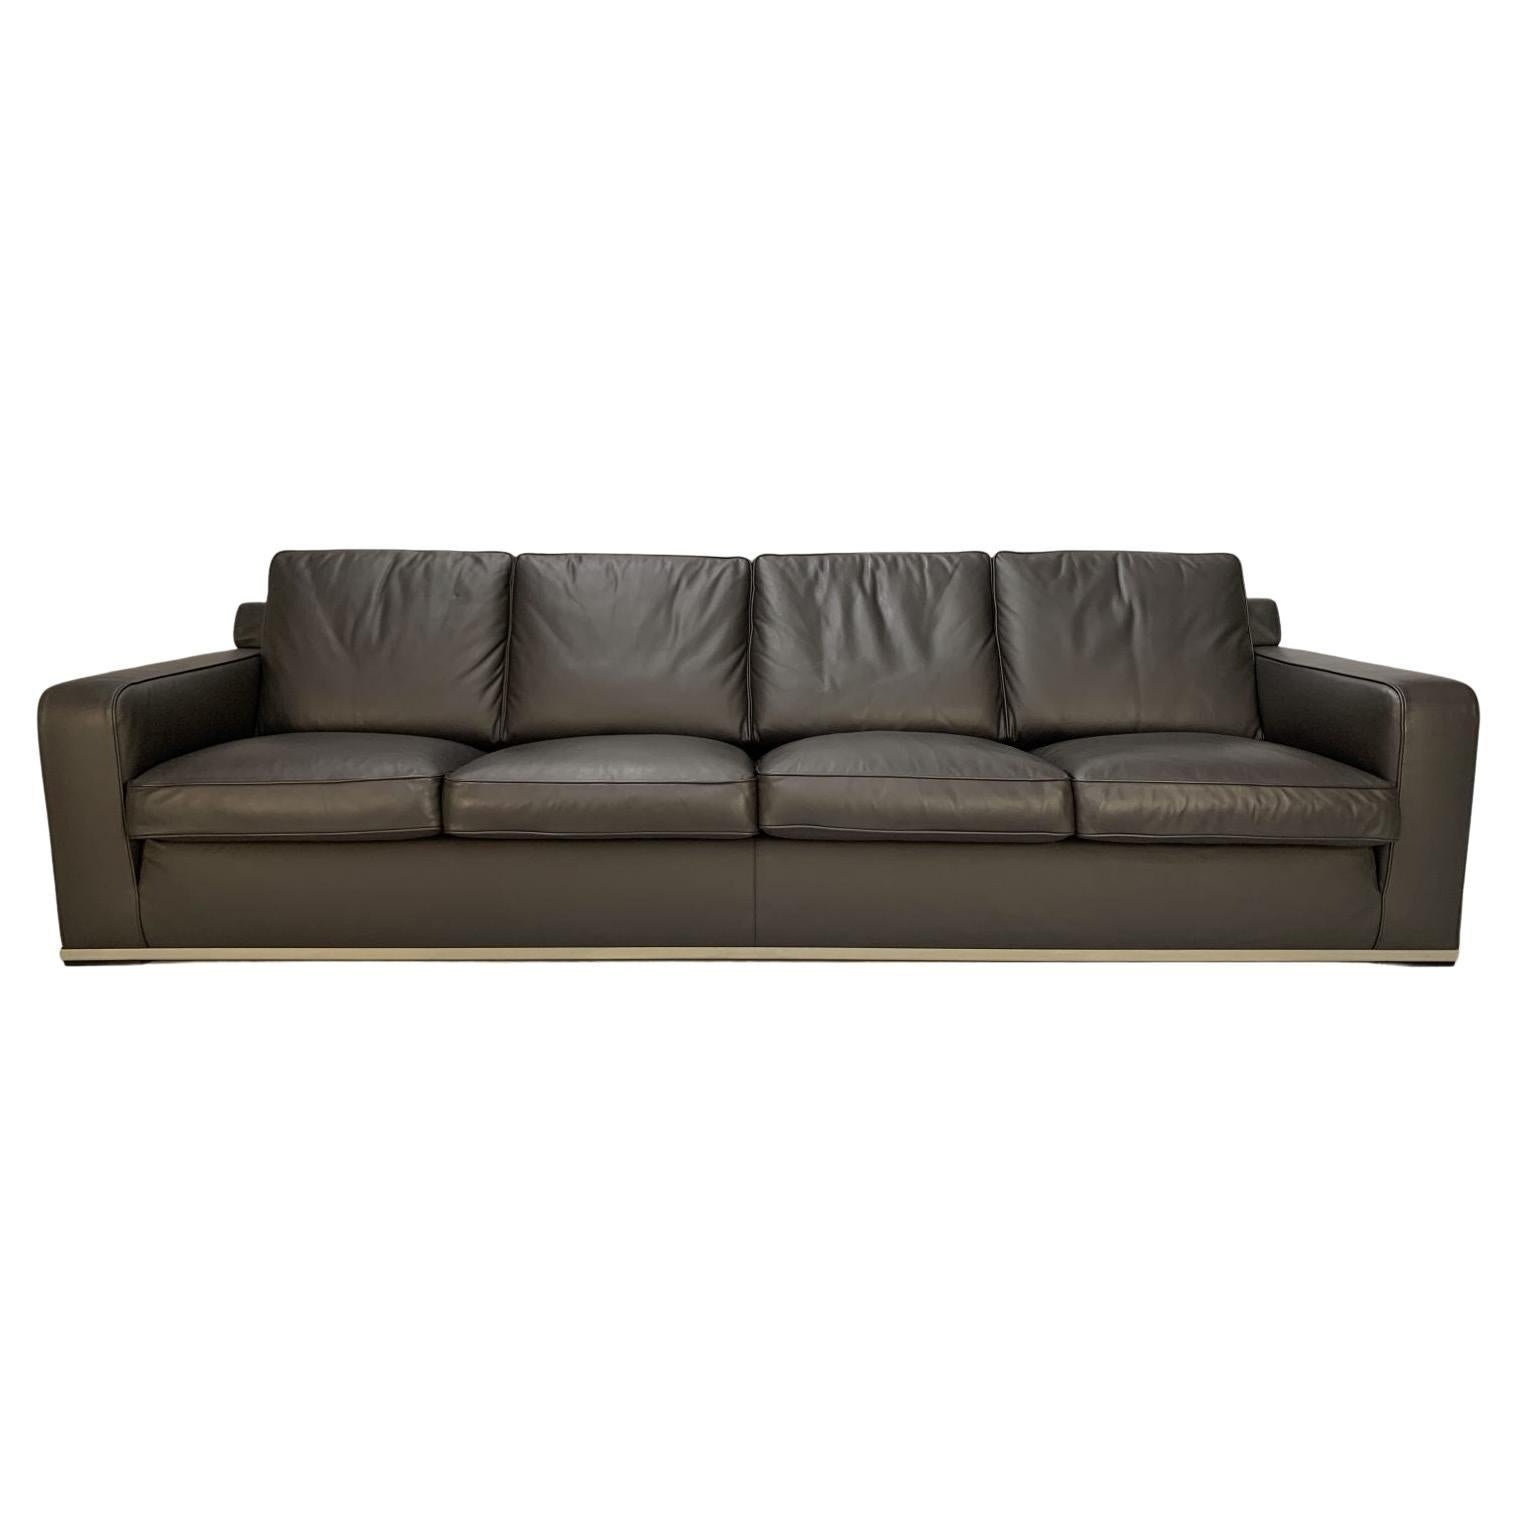 B&B Italia “Imprimateur Apta” 4-Seat Sofa in Dark Grey “Gamma” Leather For Sale